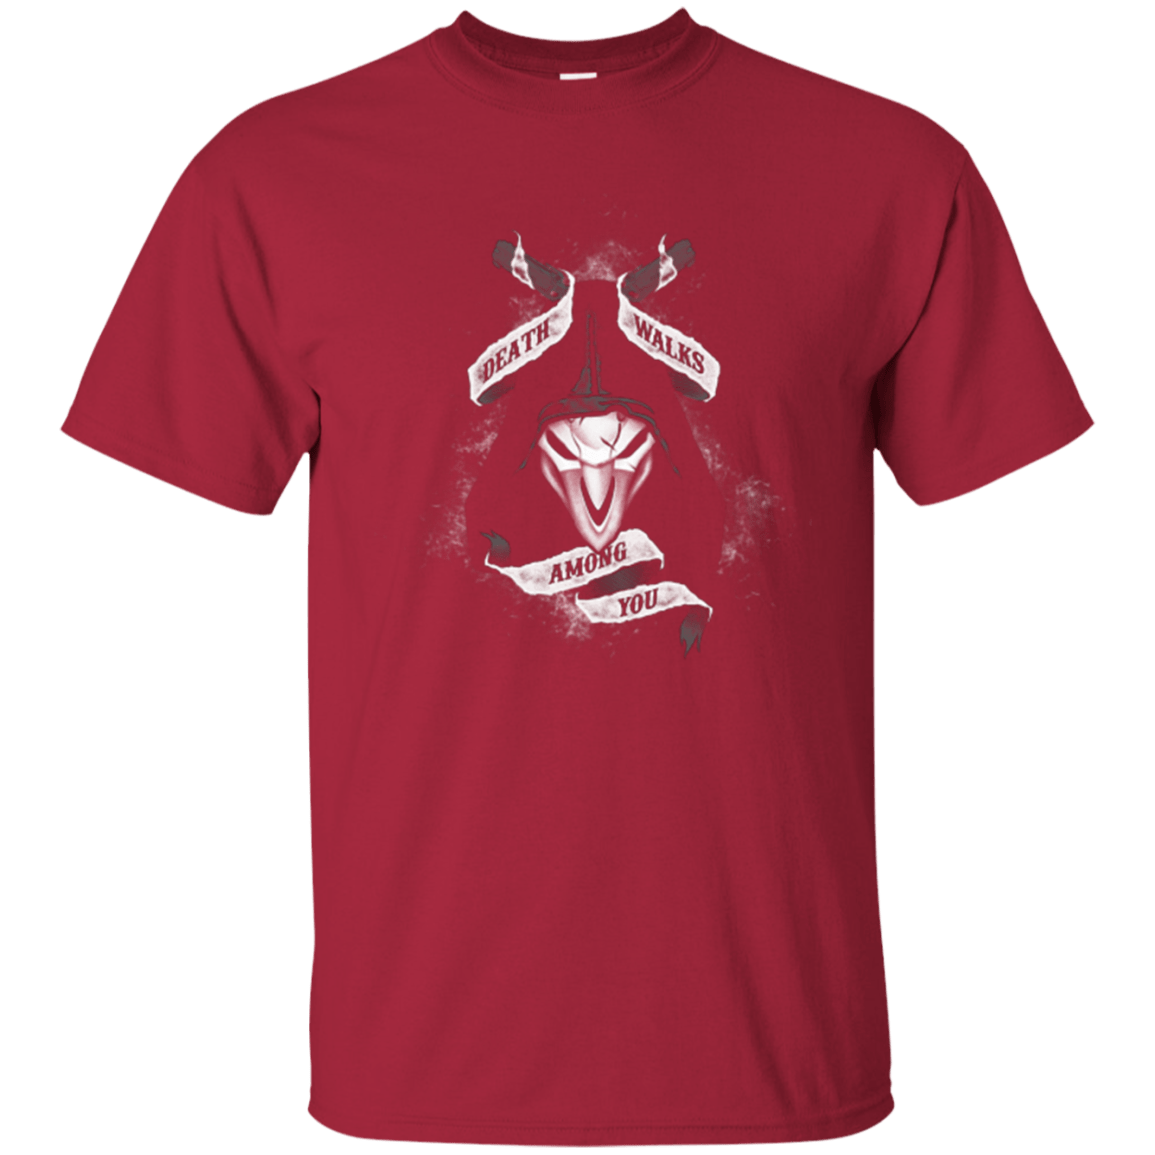 T-Shirts Cardinal / Small Death Walks Among You T-Shirt